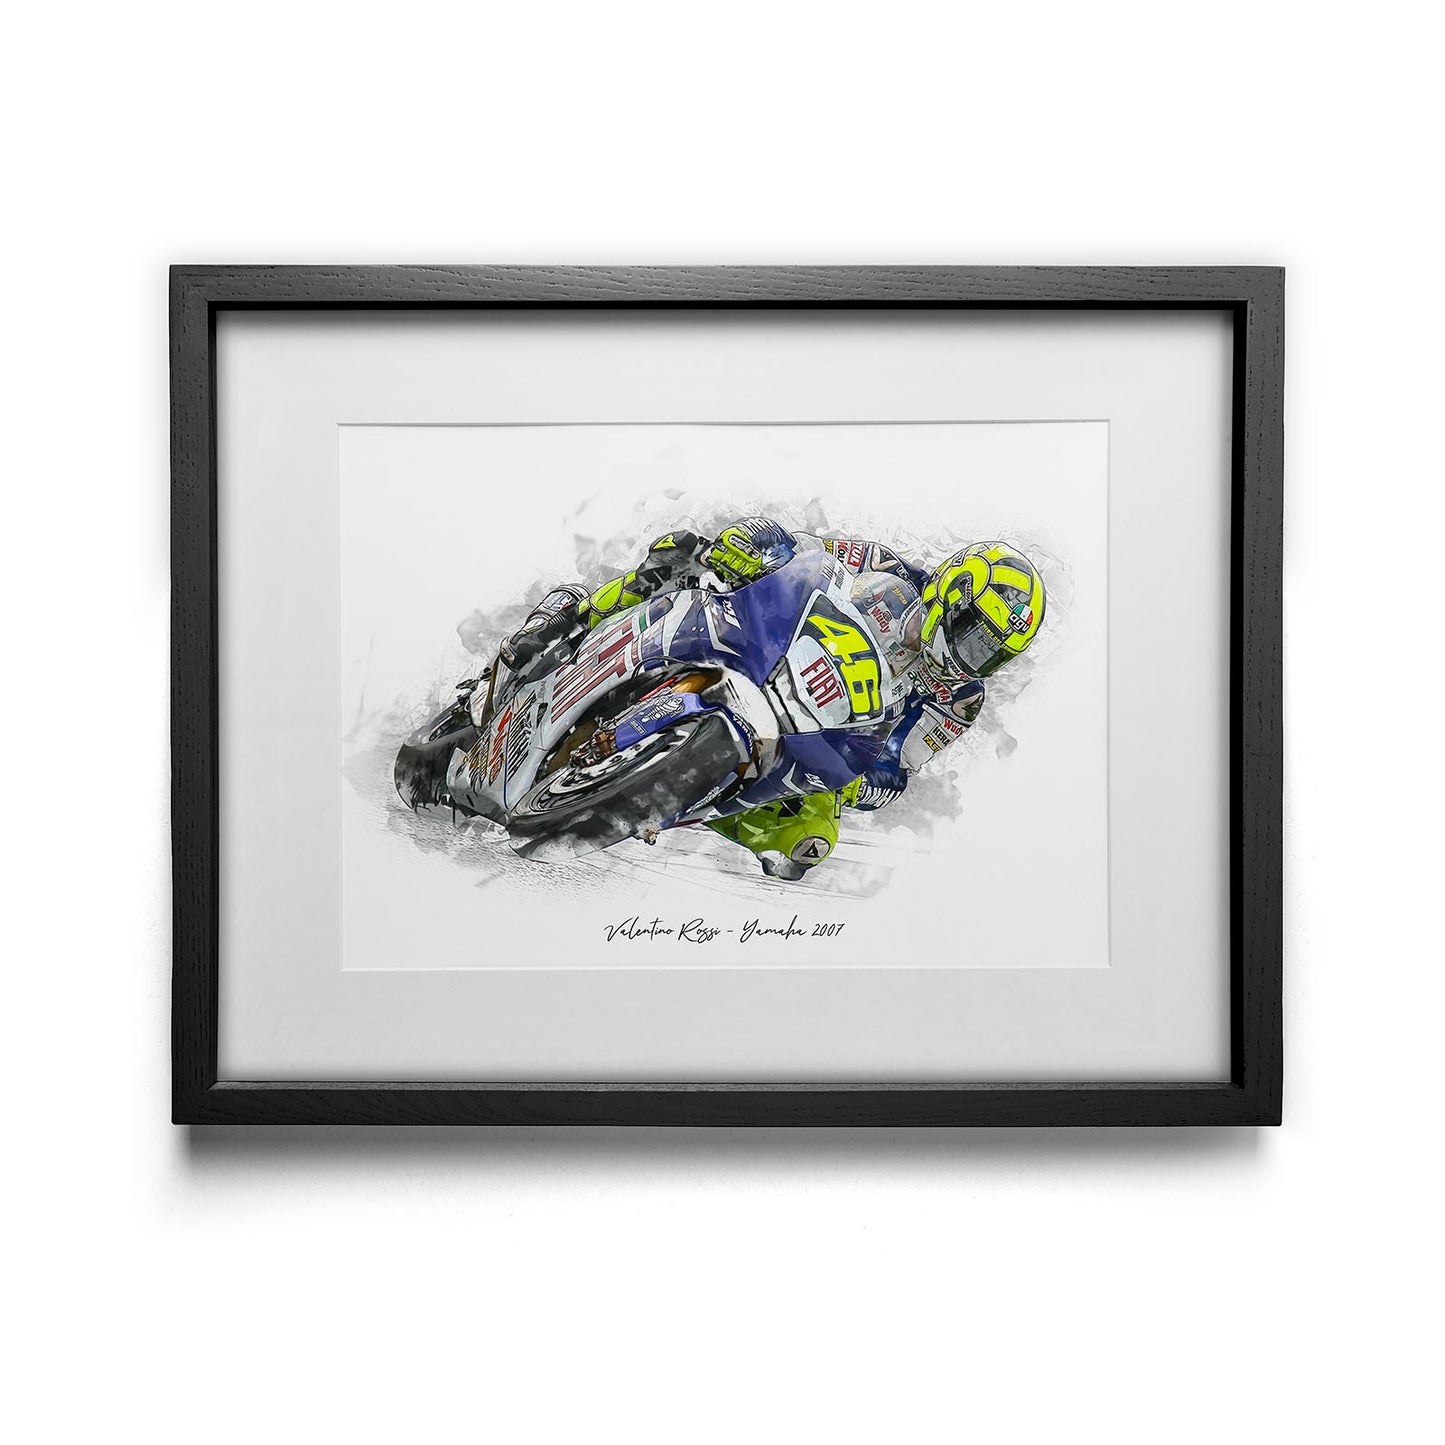 Valentino Rossi - Yamaha 2007 - Kunstdruck gerahmt - 40 x 30  cm